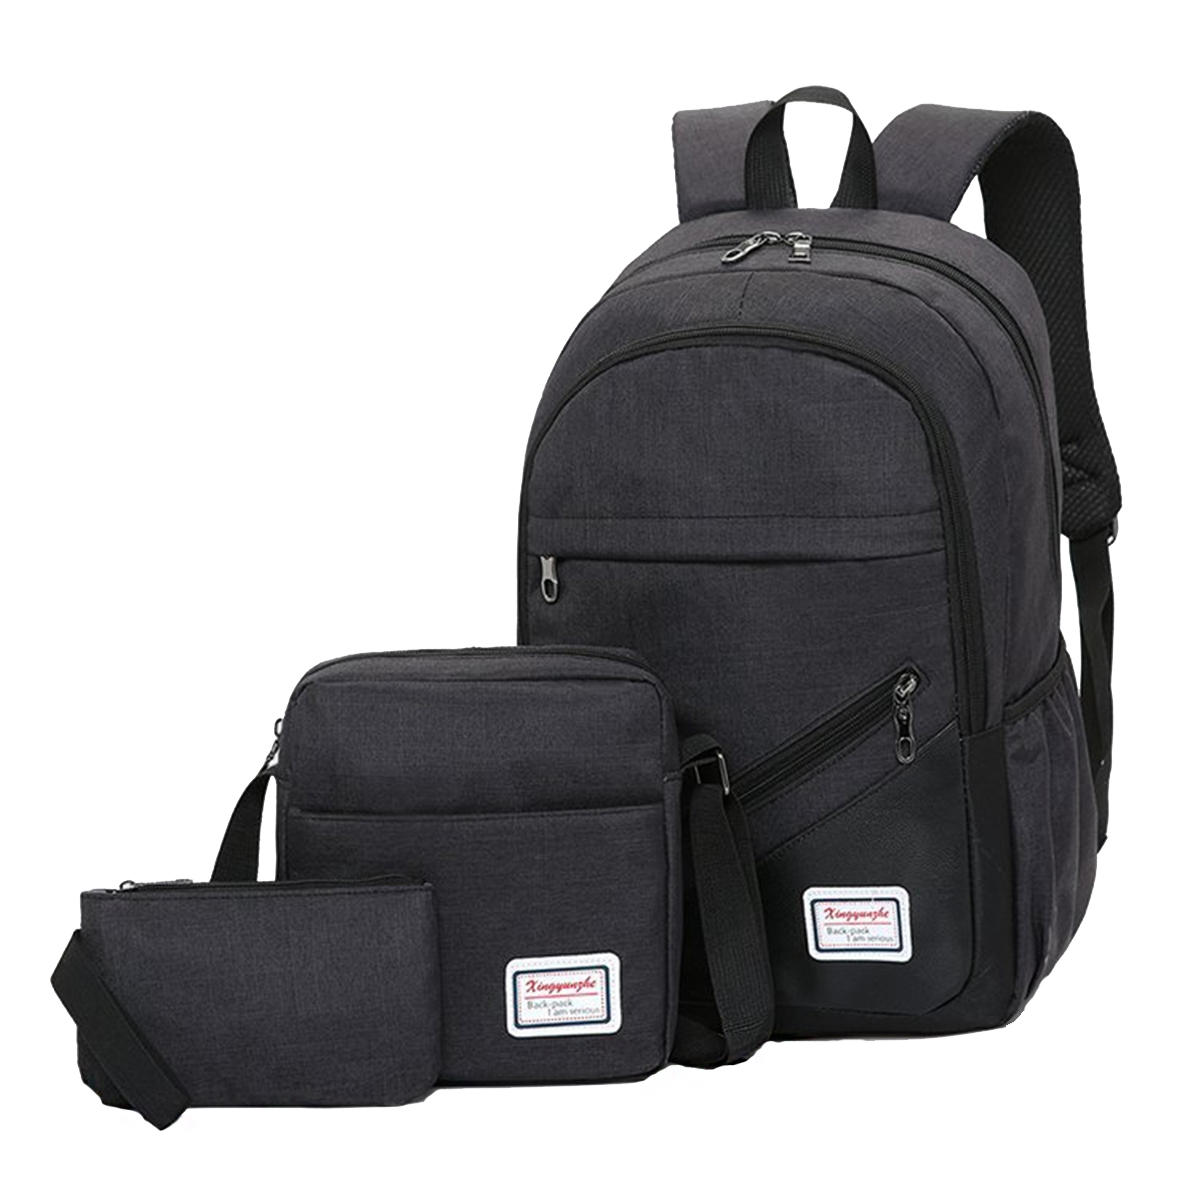 3 Stück Rucksack Schule Tasche Laptop Tasche Canvas Cross Body Taschen Camping Reise Handtasche Federtasche 